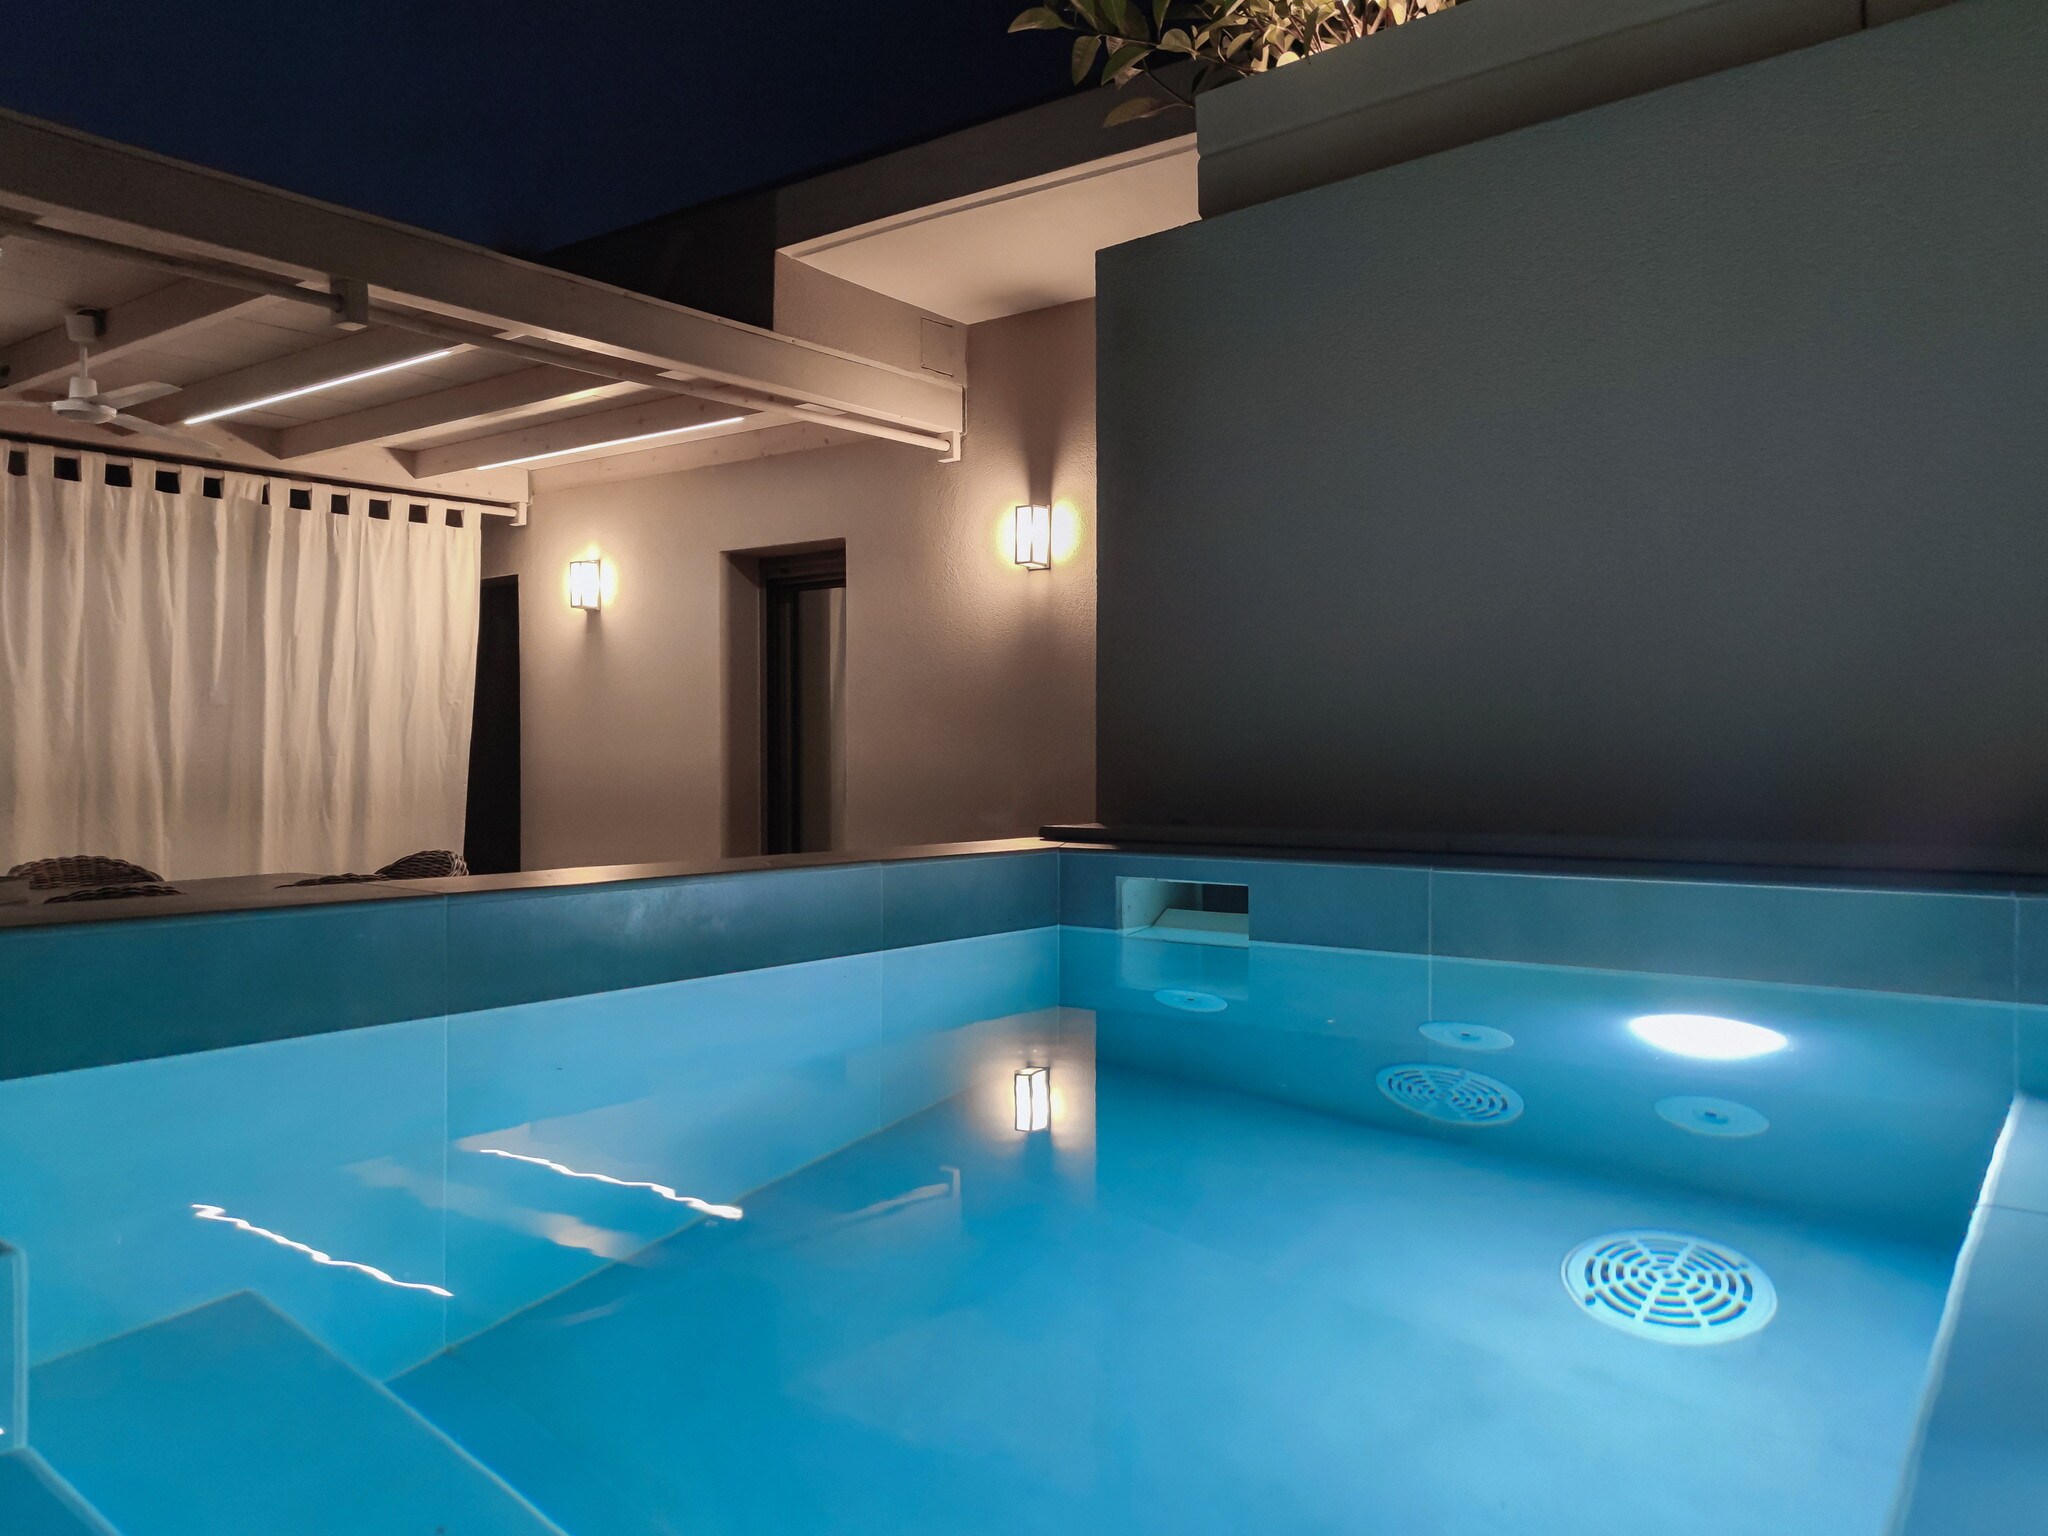 Swimming pool area of Modern Luxury Apartment,mini pool, spa,Full Facilities,Rethymno,Crete